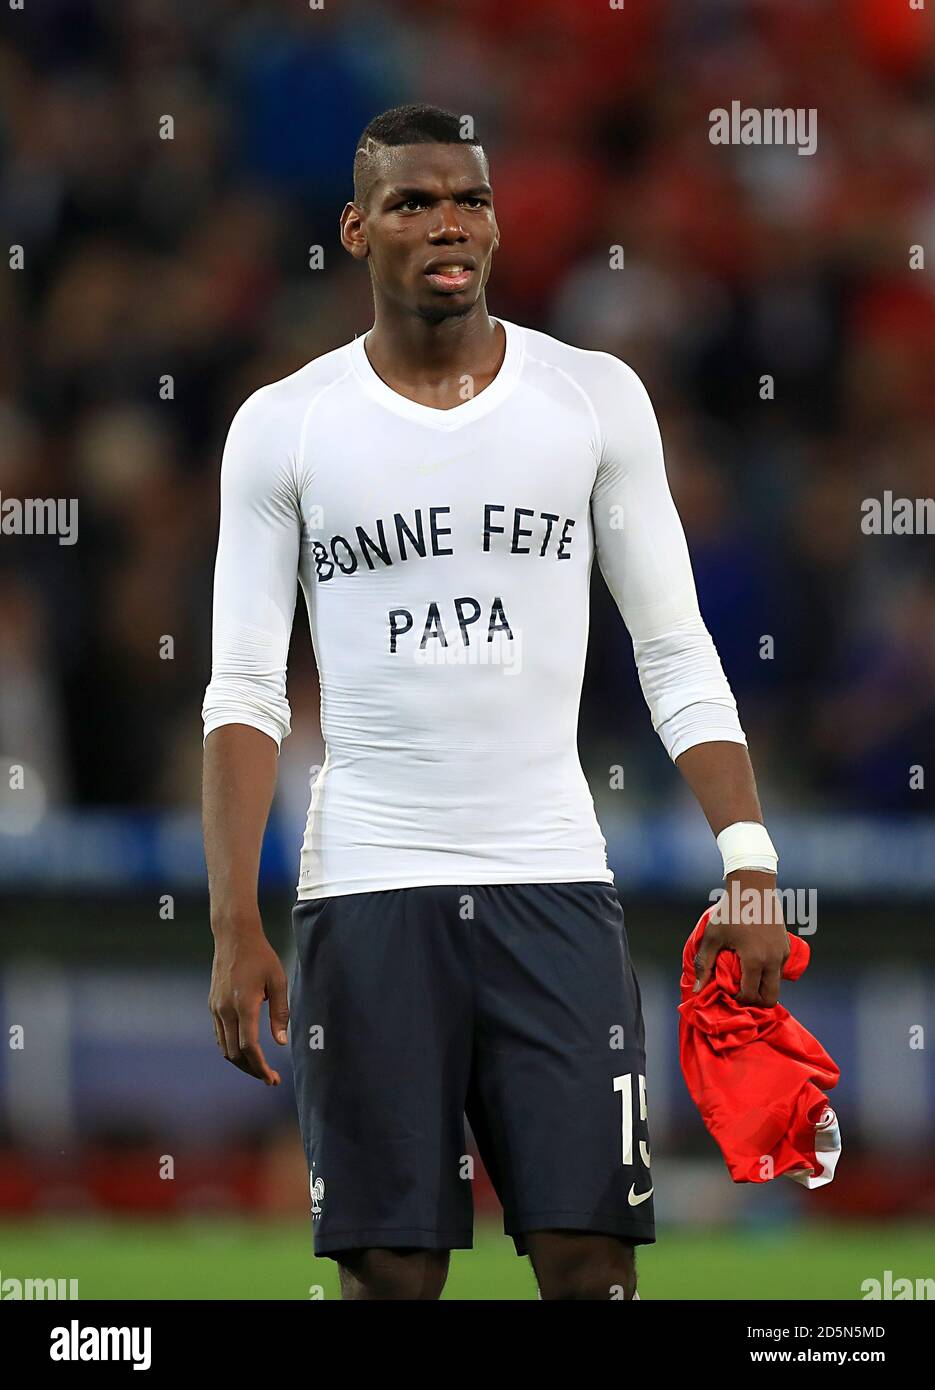 France's Paul Pogba after the final whistle wearing a Bonne Fete Papa t- shirt Stock Photo - Alamy